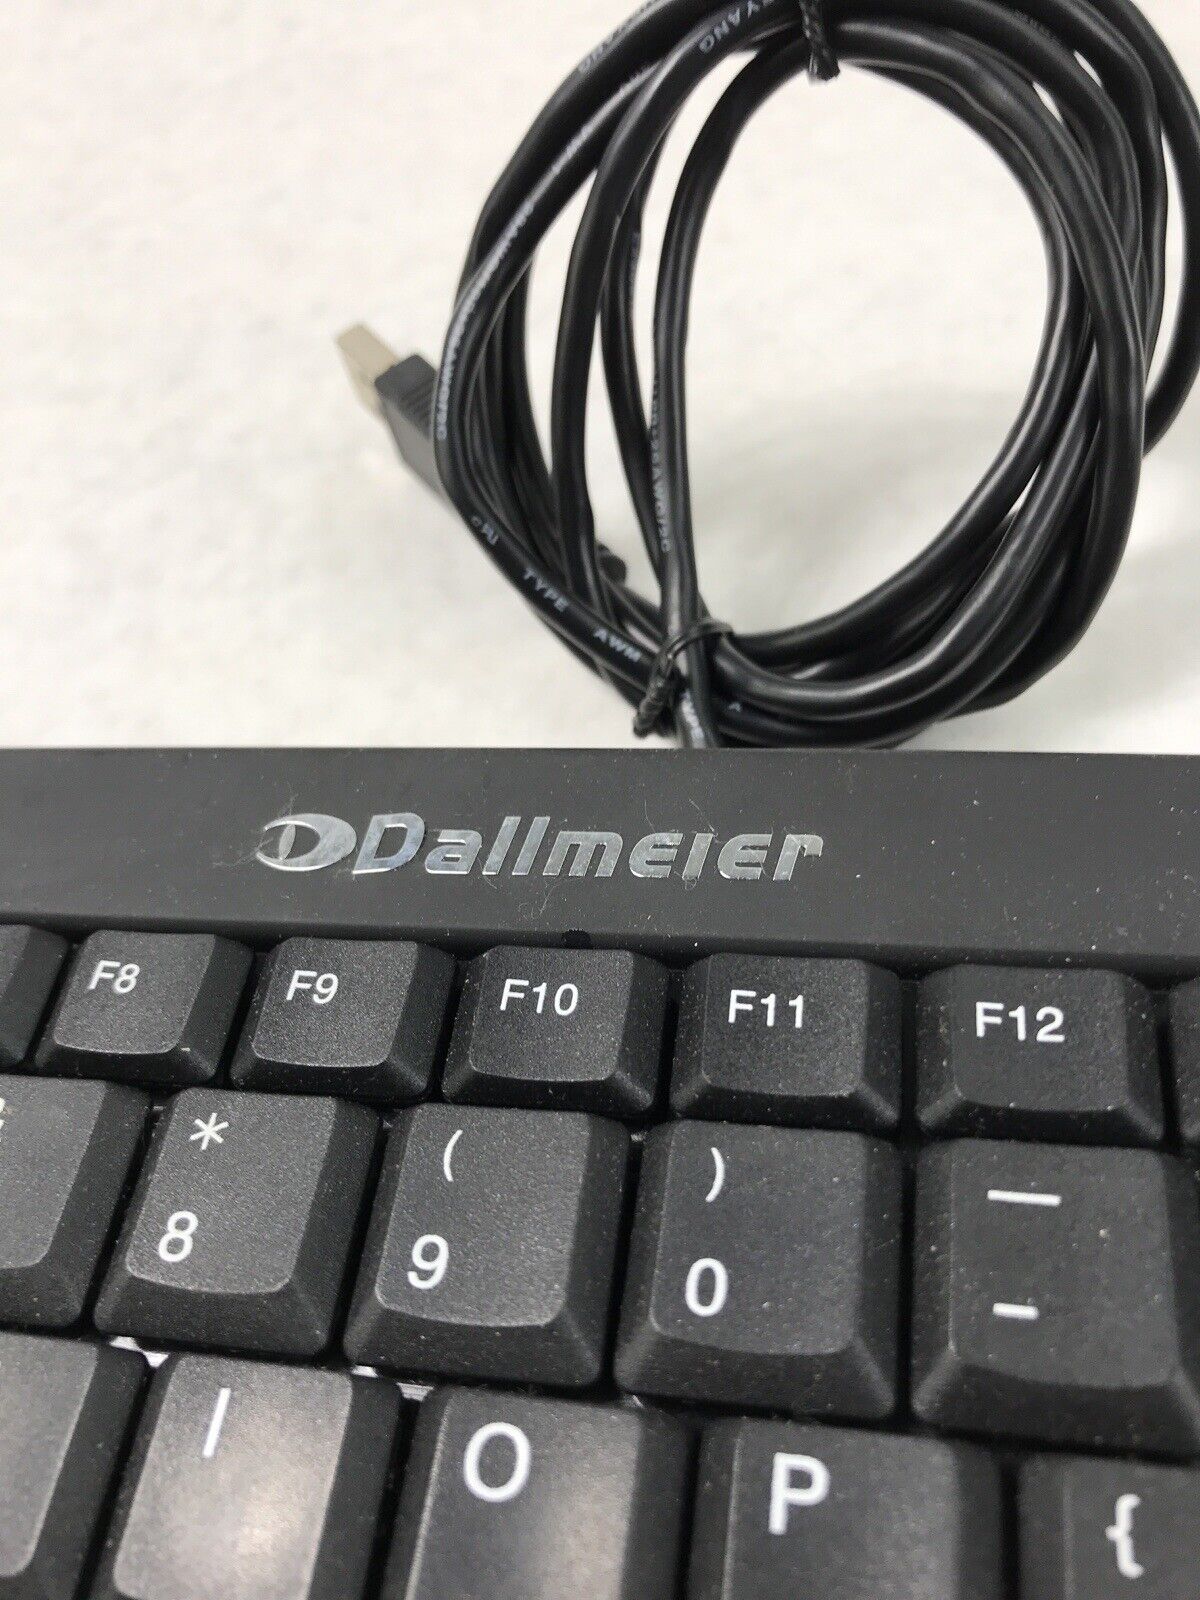 Dallmeier 12775 USB Wired Keyboard Keysonic EAR888-62976468